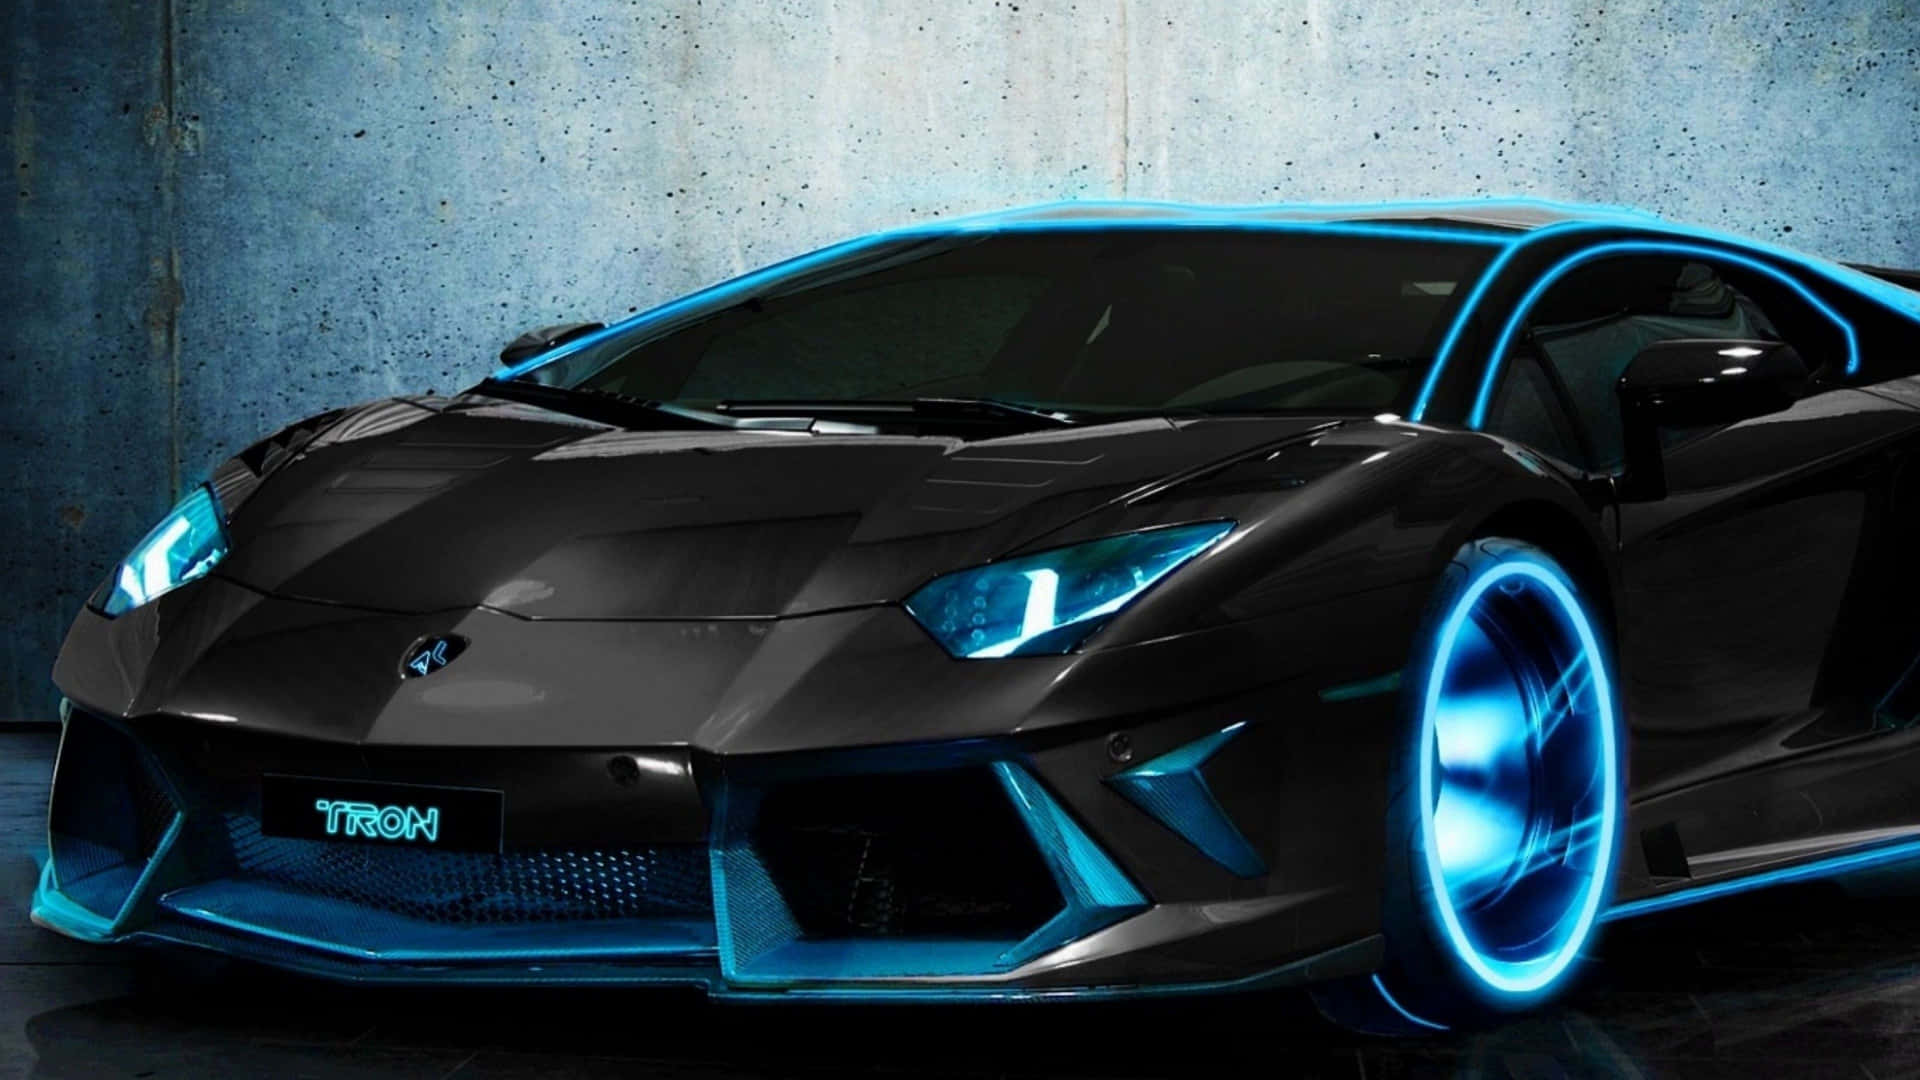 Feel the power of driving a modern Lamborghini